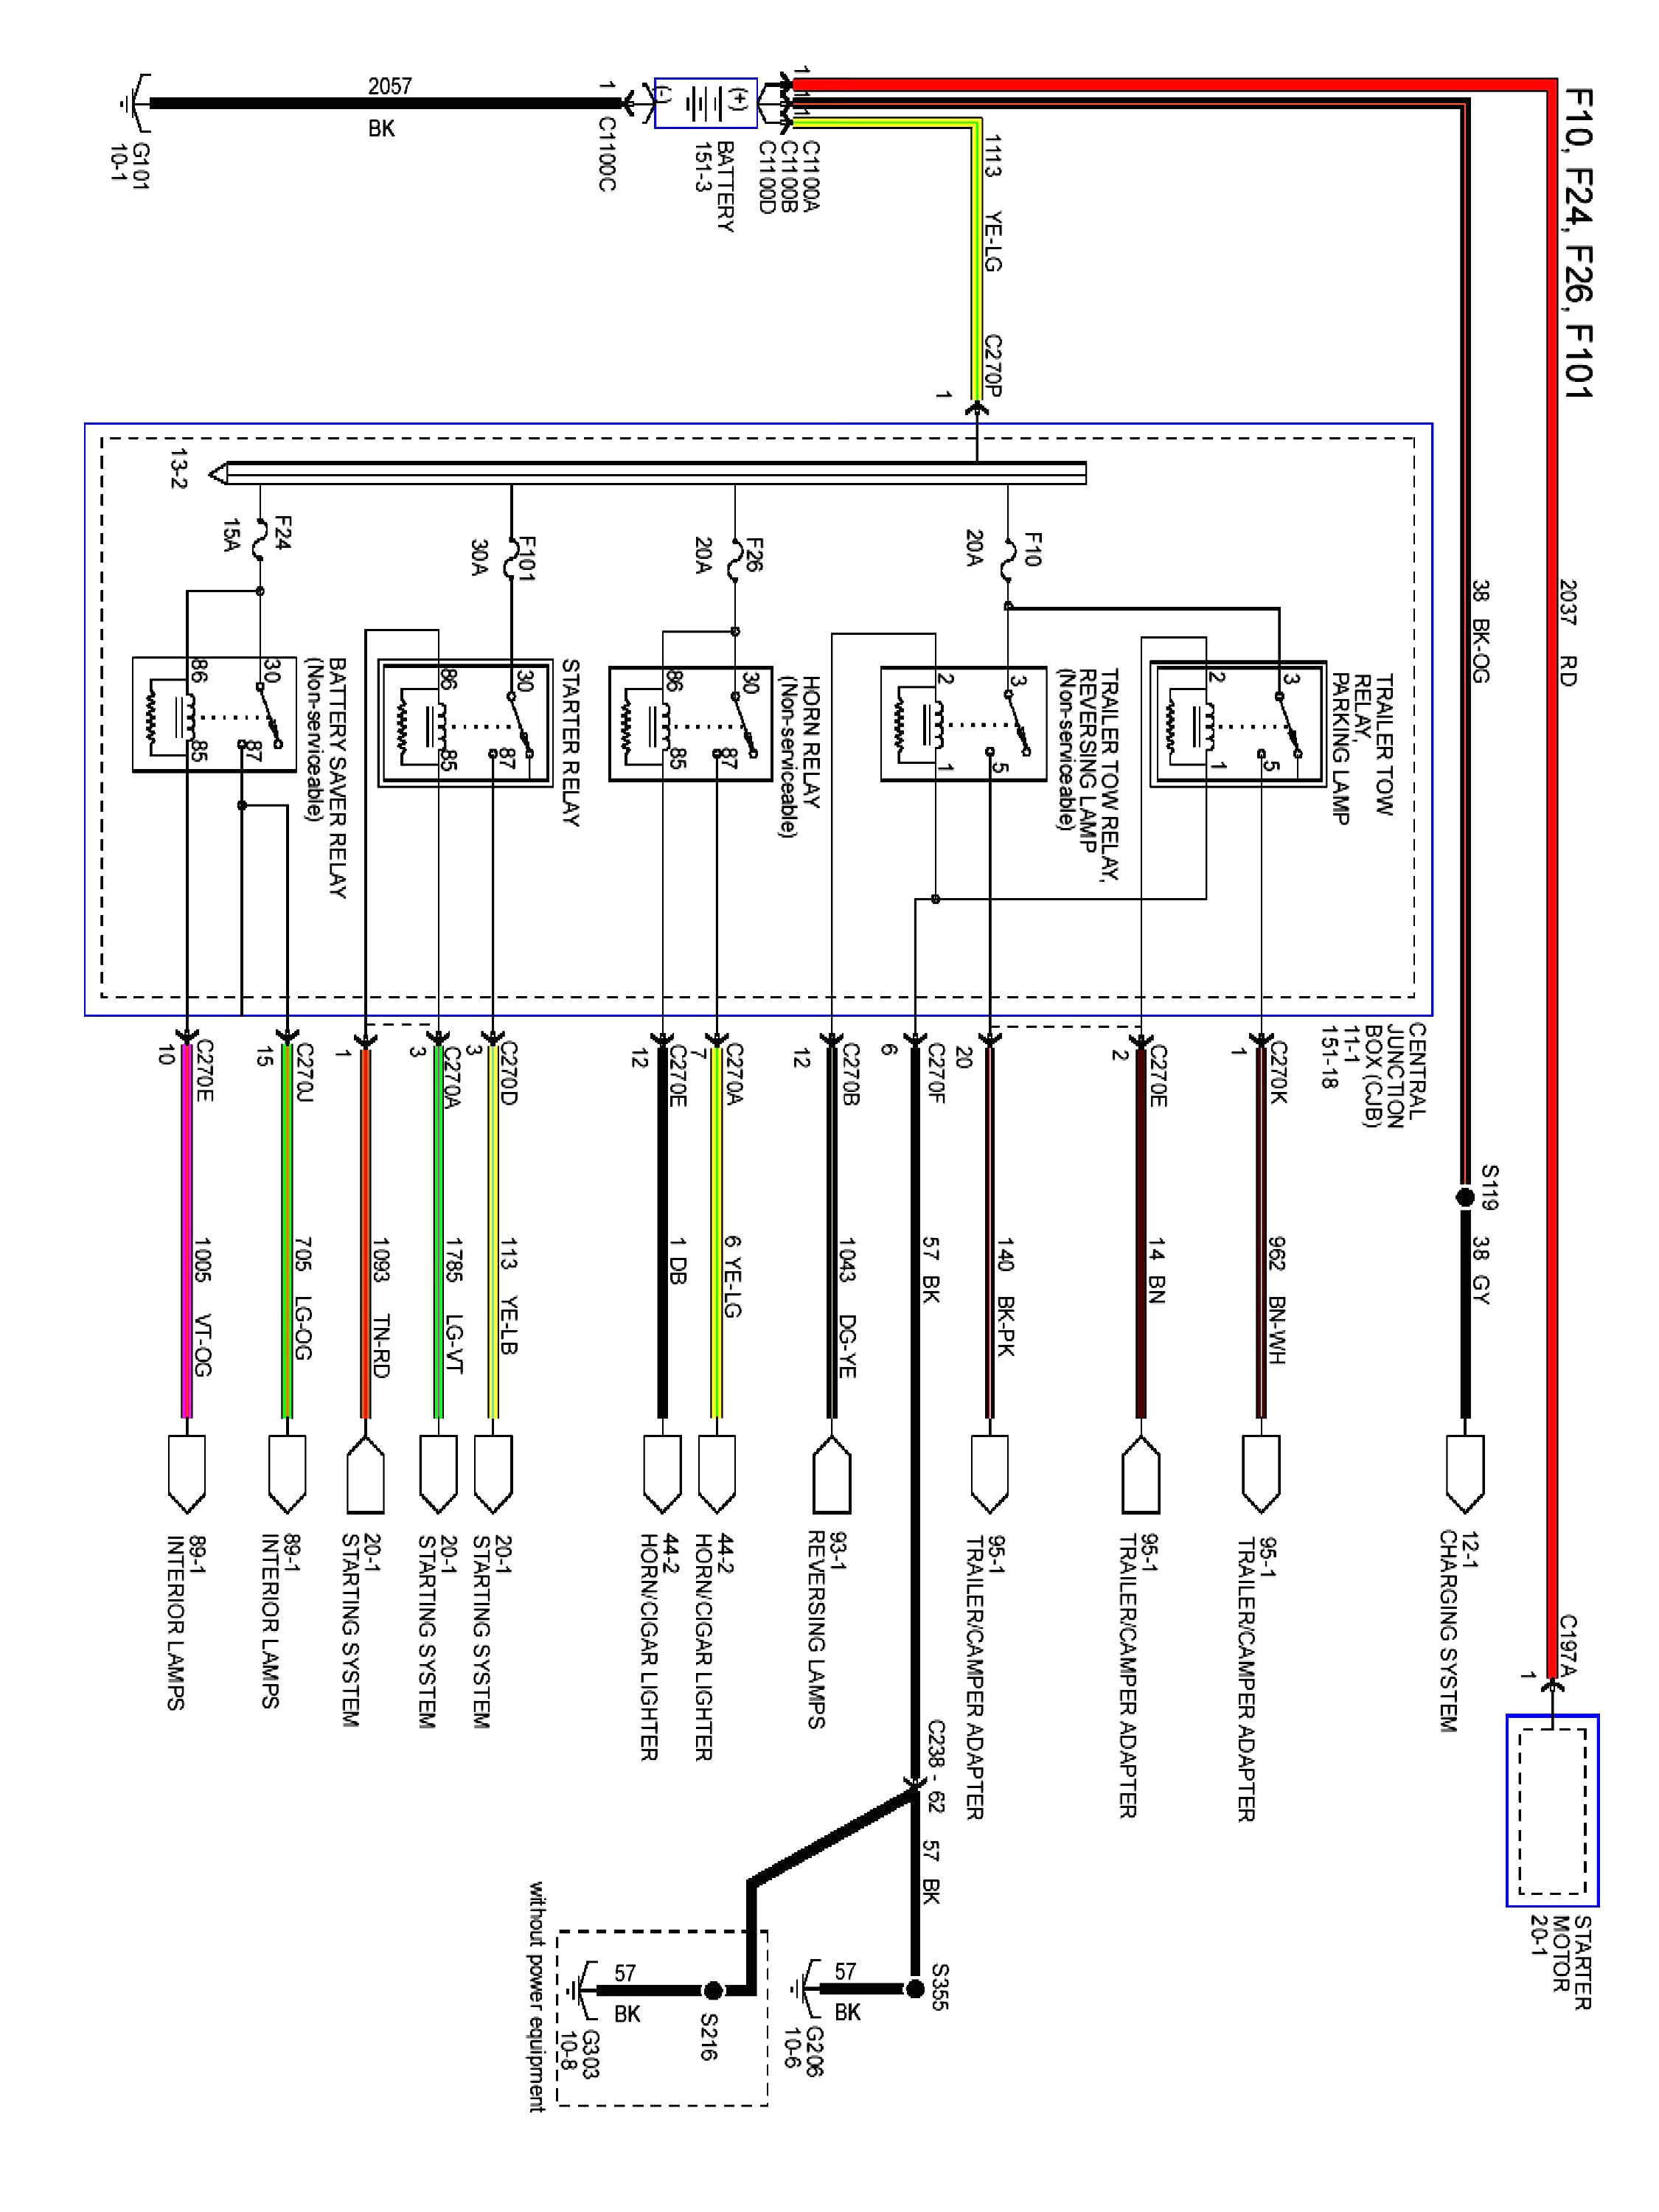 medtec ambulance wiring diagrams wiring diagram insider ambulance wiring diagram wiring diagram datasource medtec ambulance wiring